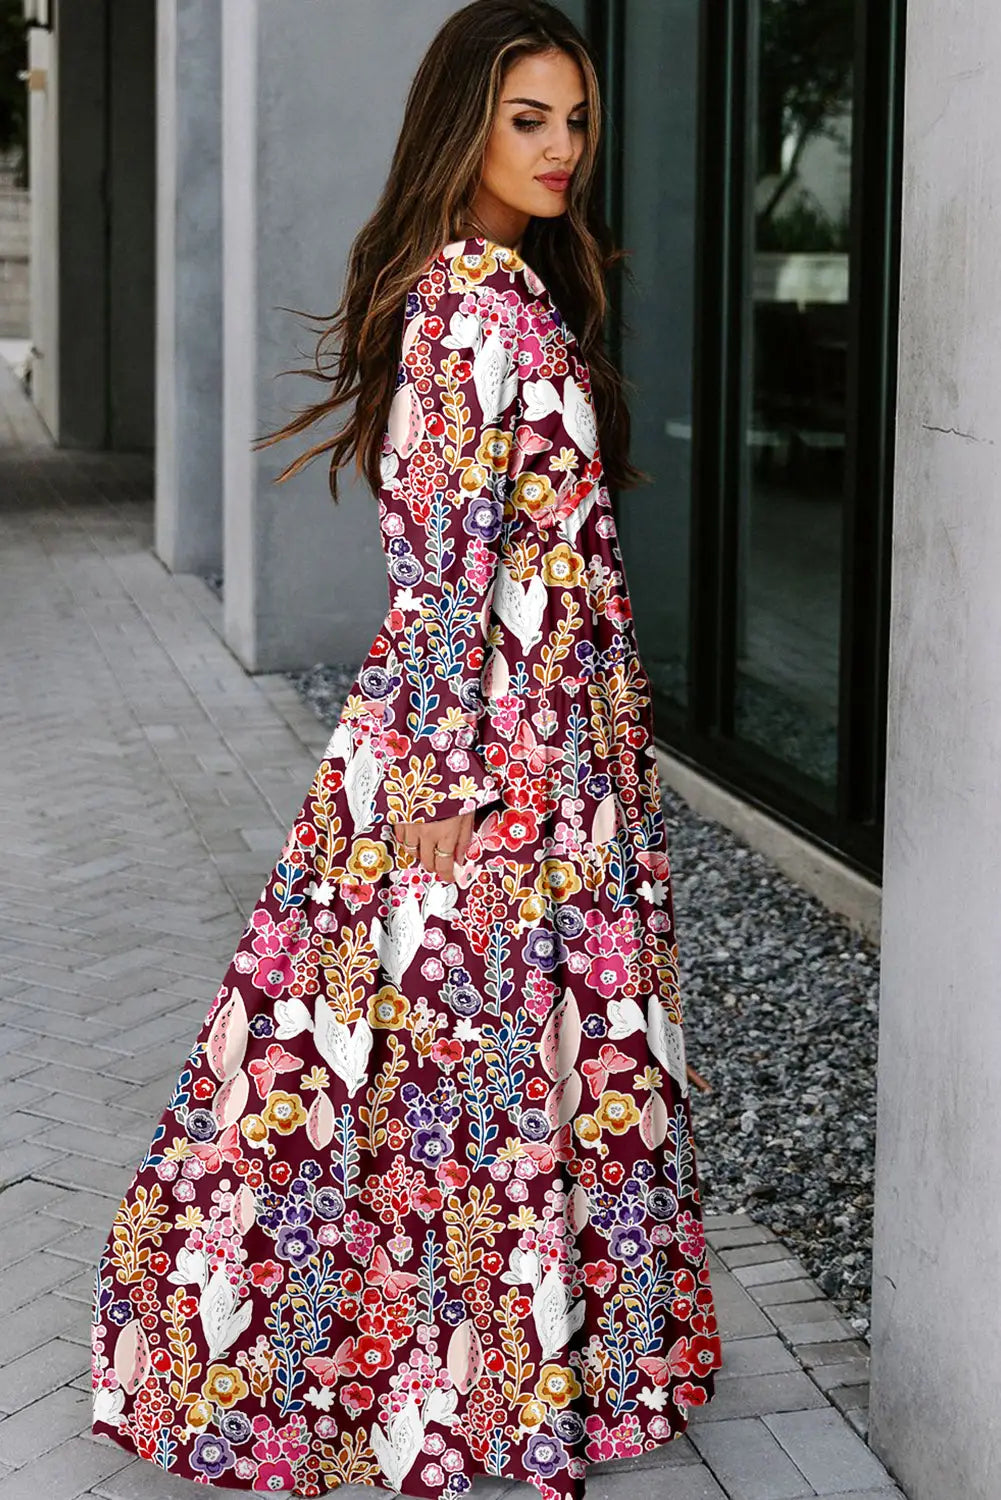 Violet v neck floral print empire waist maxi dress - dresses